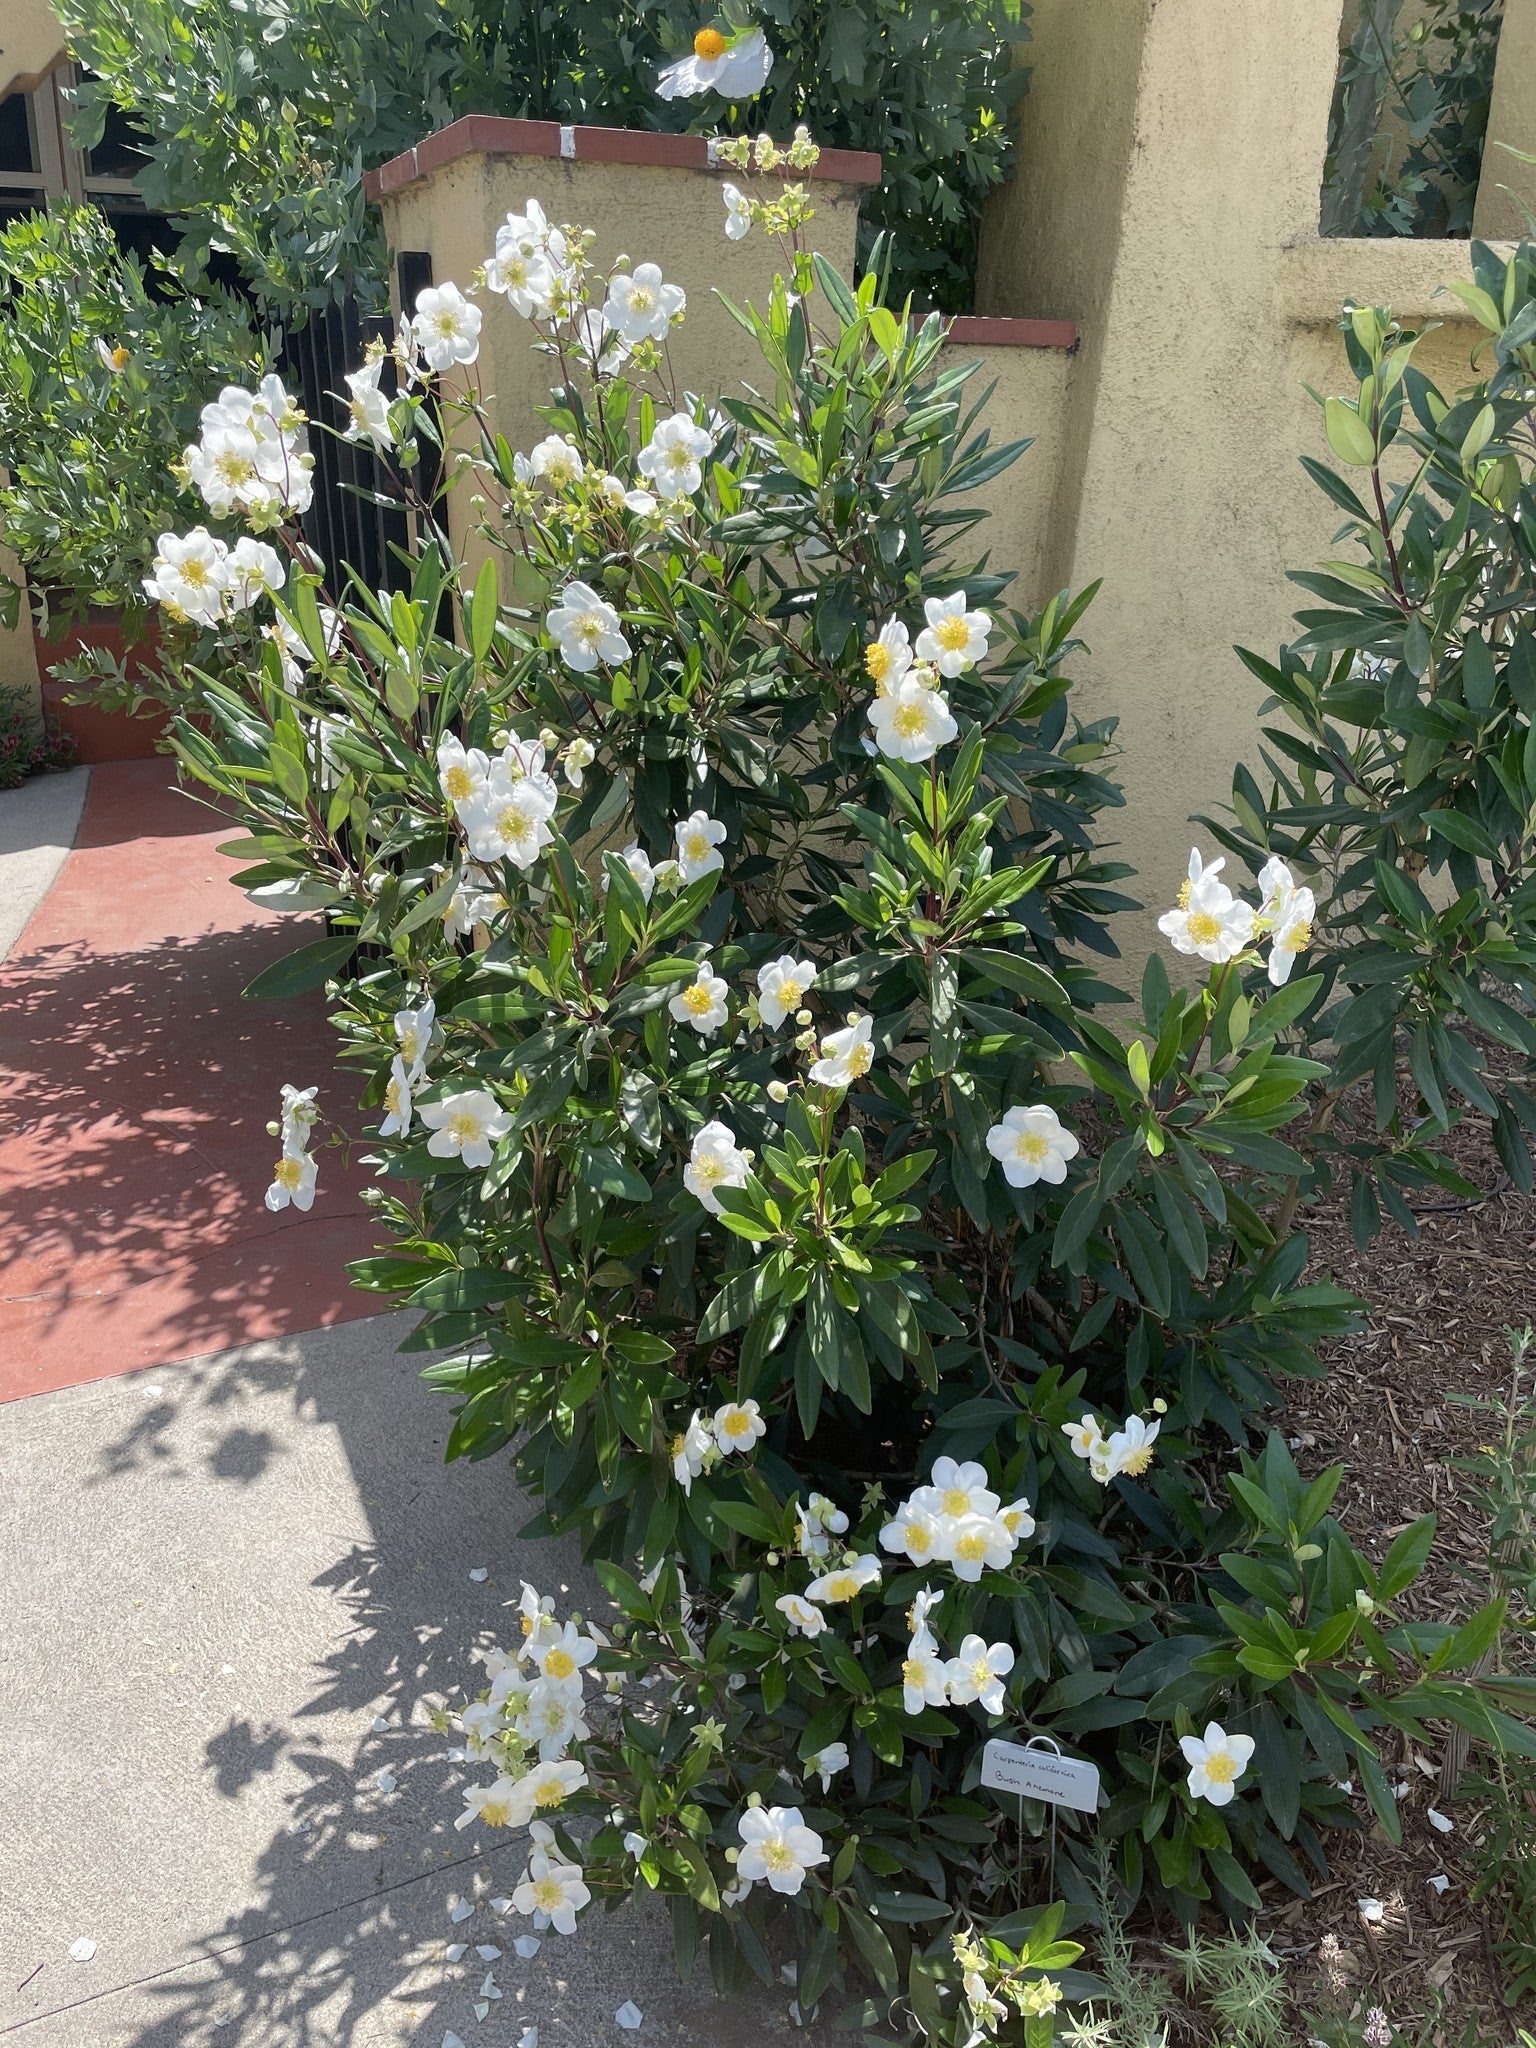 Carpenteria californica - Bush Anemone, Tree Anemone (Plant)